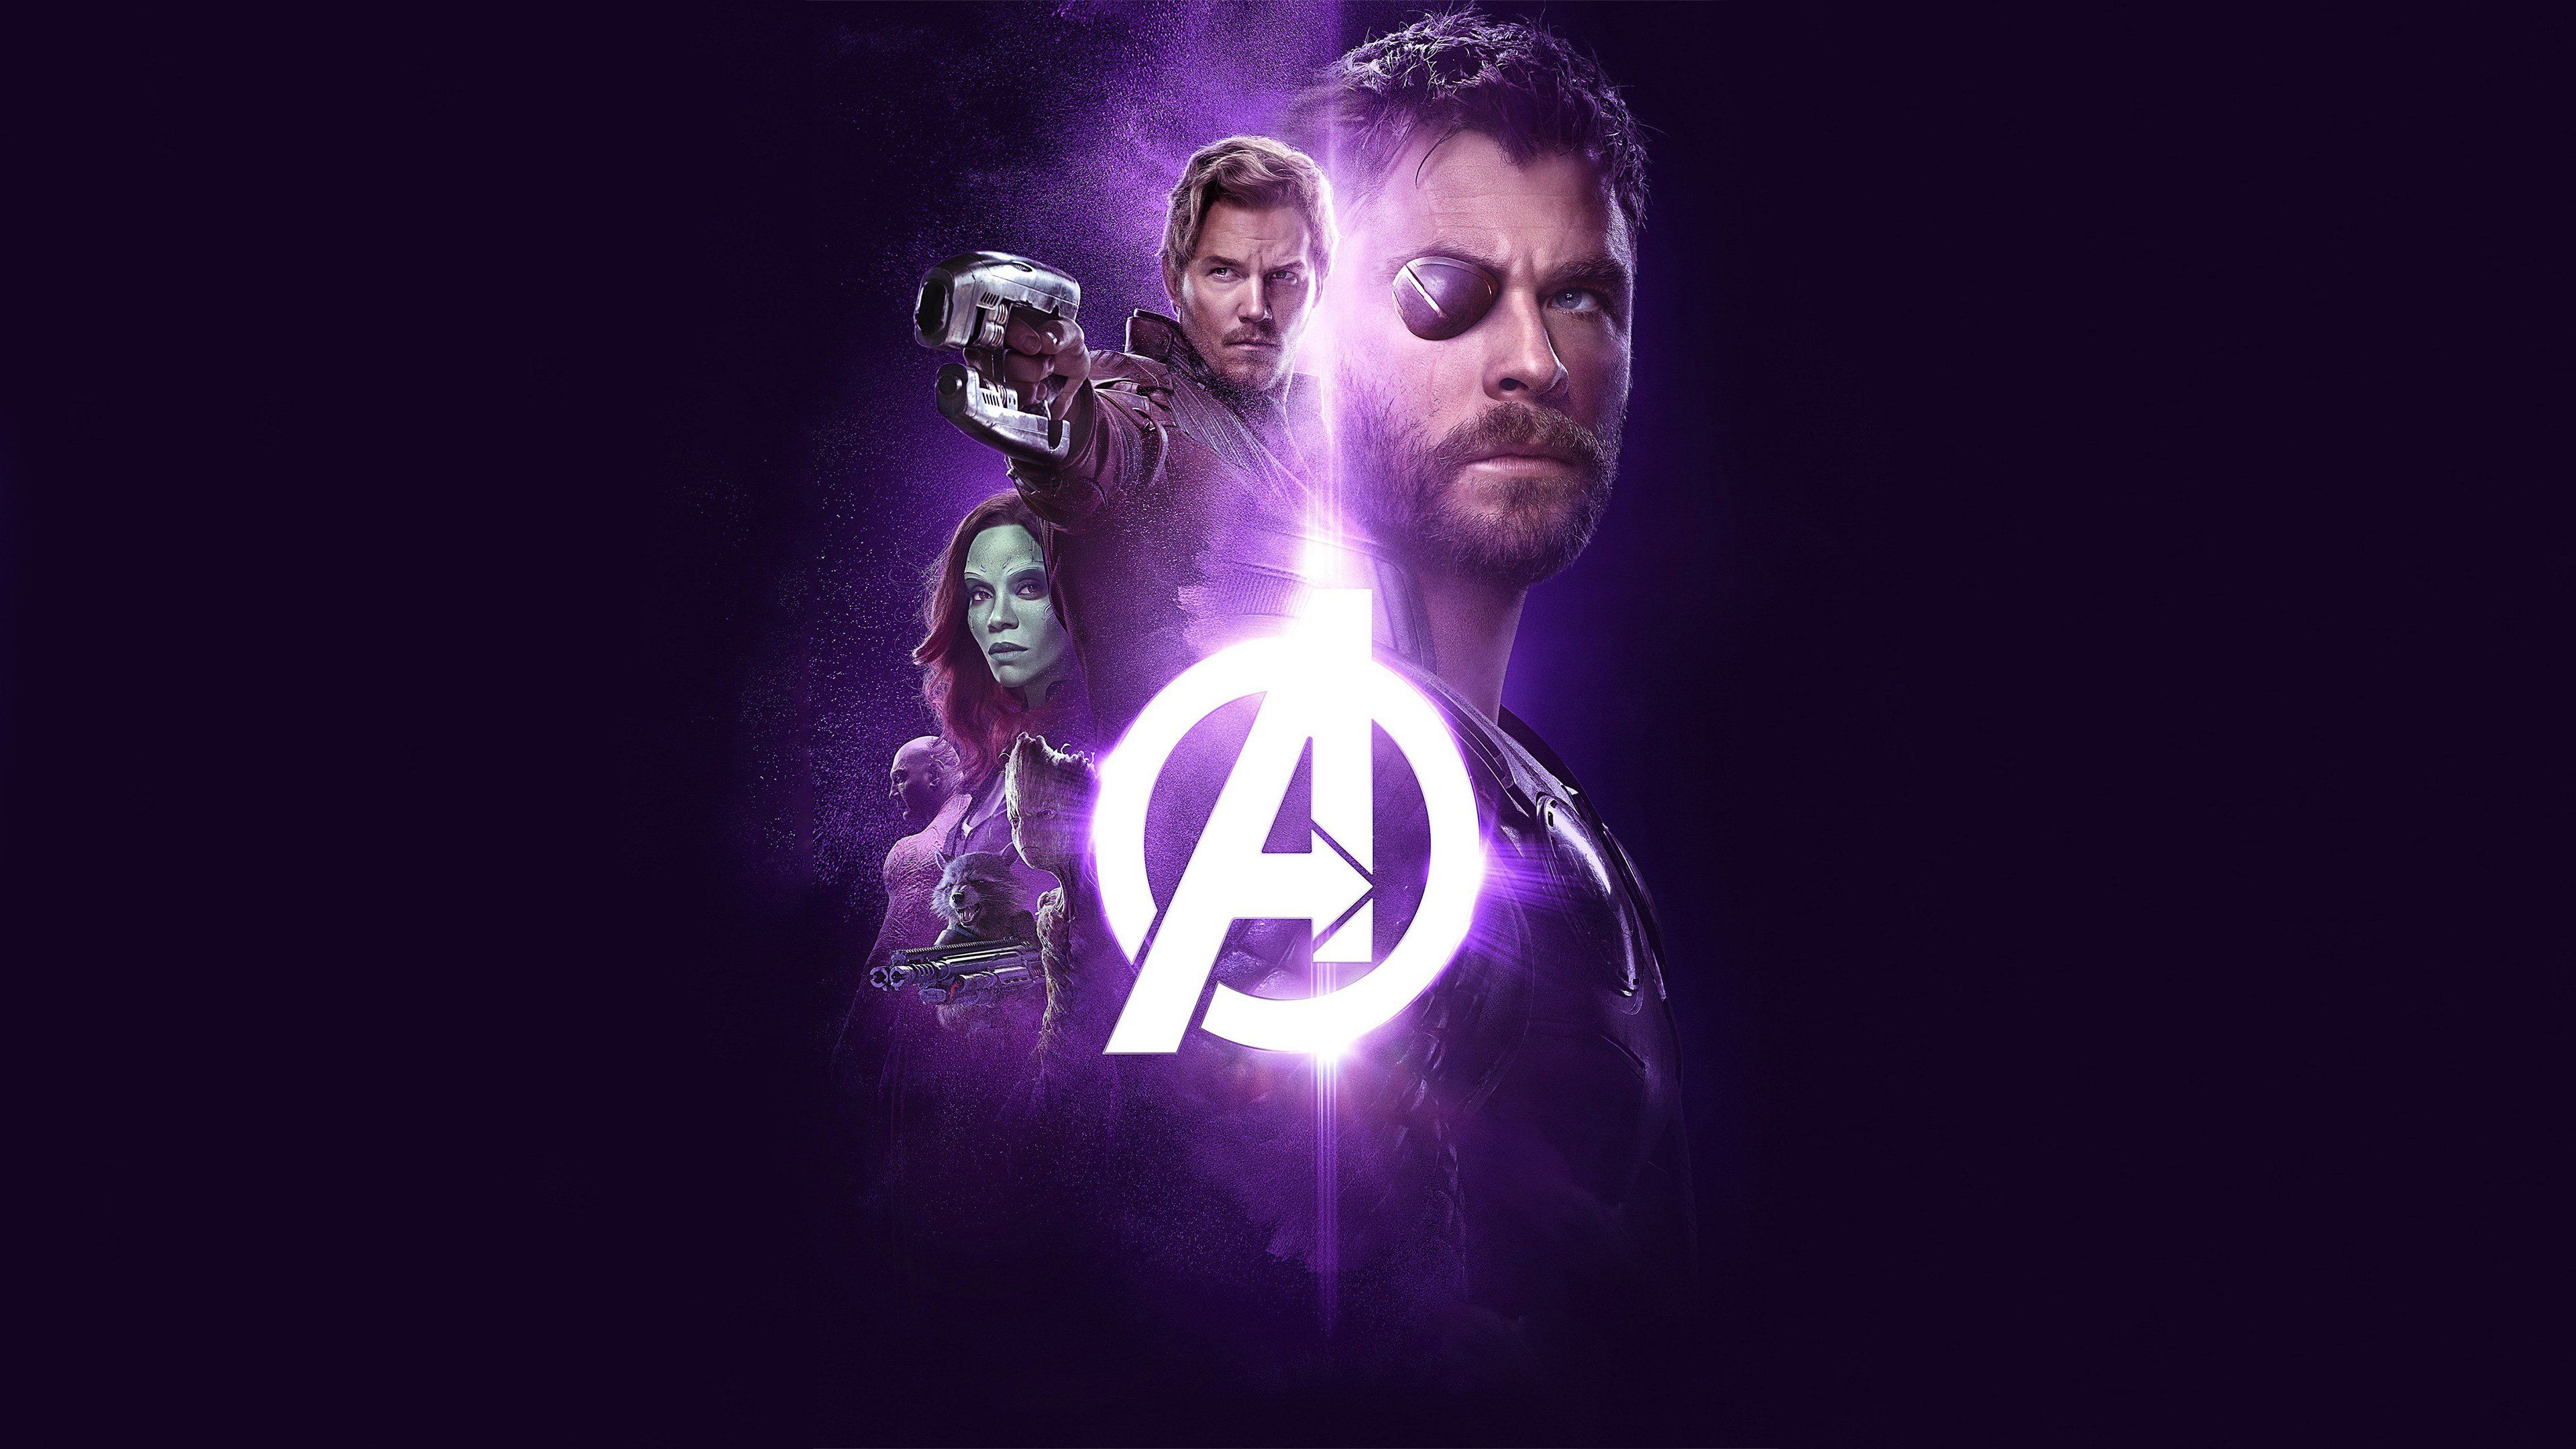 Free download Avengers Infinity War 4k Ultra HD Wallpaper Background Image [3840x2160] for your Desktop, Mobile & Tablet. Explore Avengers: Infinity War 4K Wallpaper. Avengers: Infinity War 4K Wallpaper